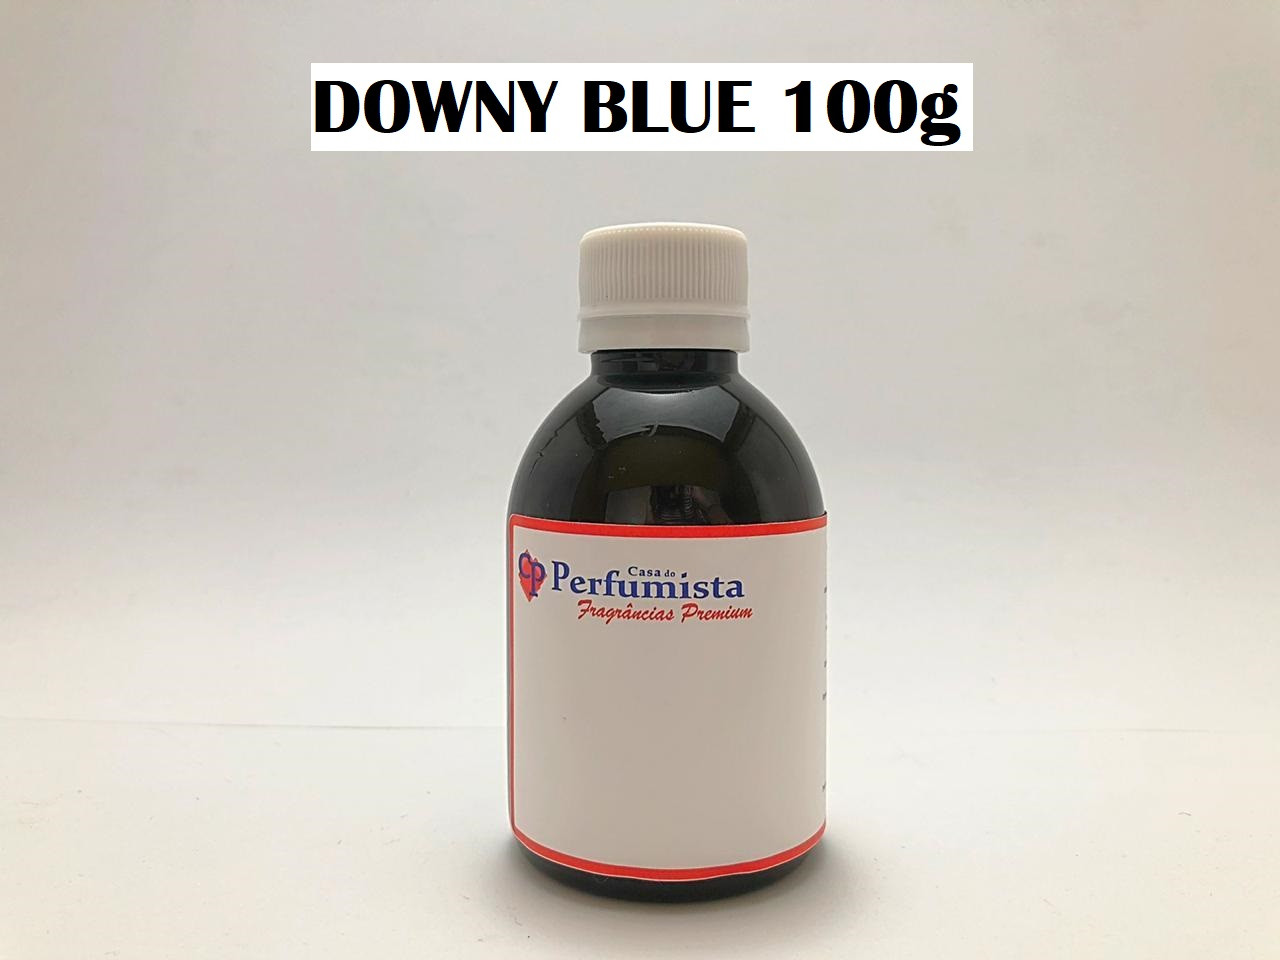 DOWNY BLUE - 100g